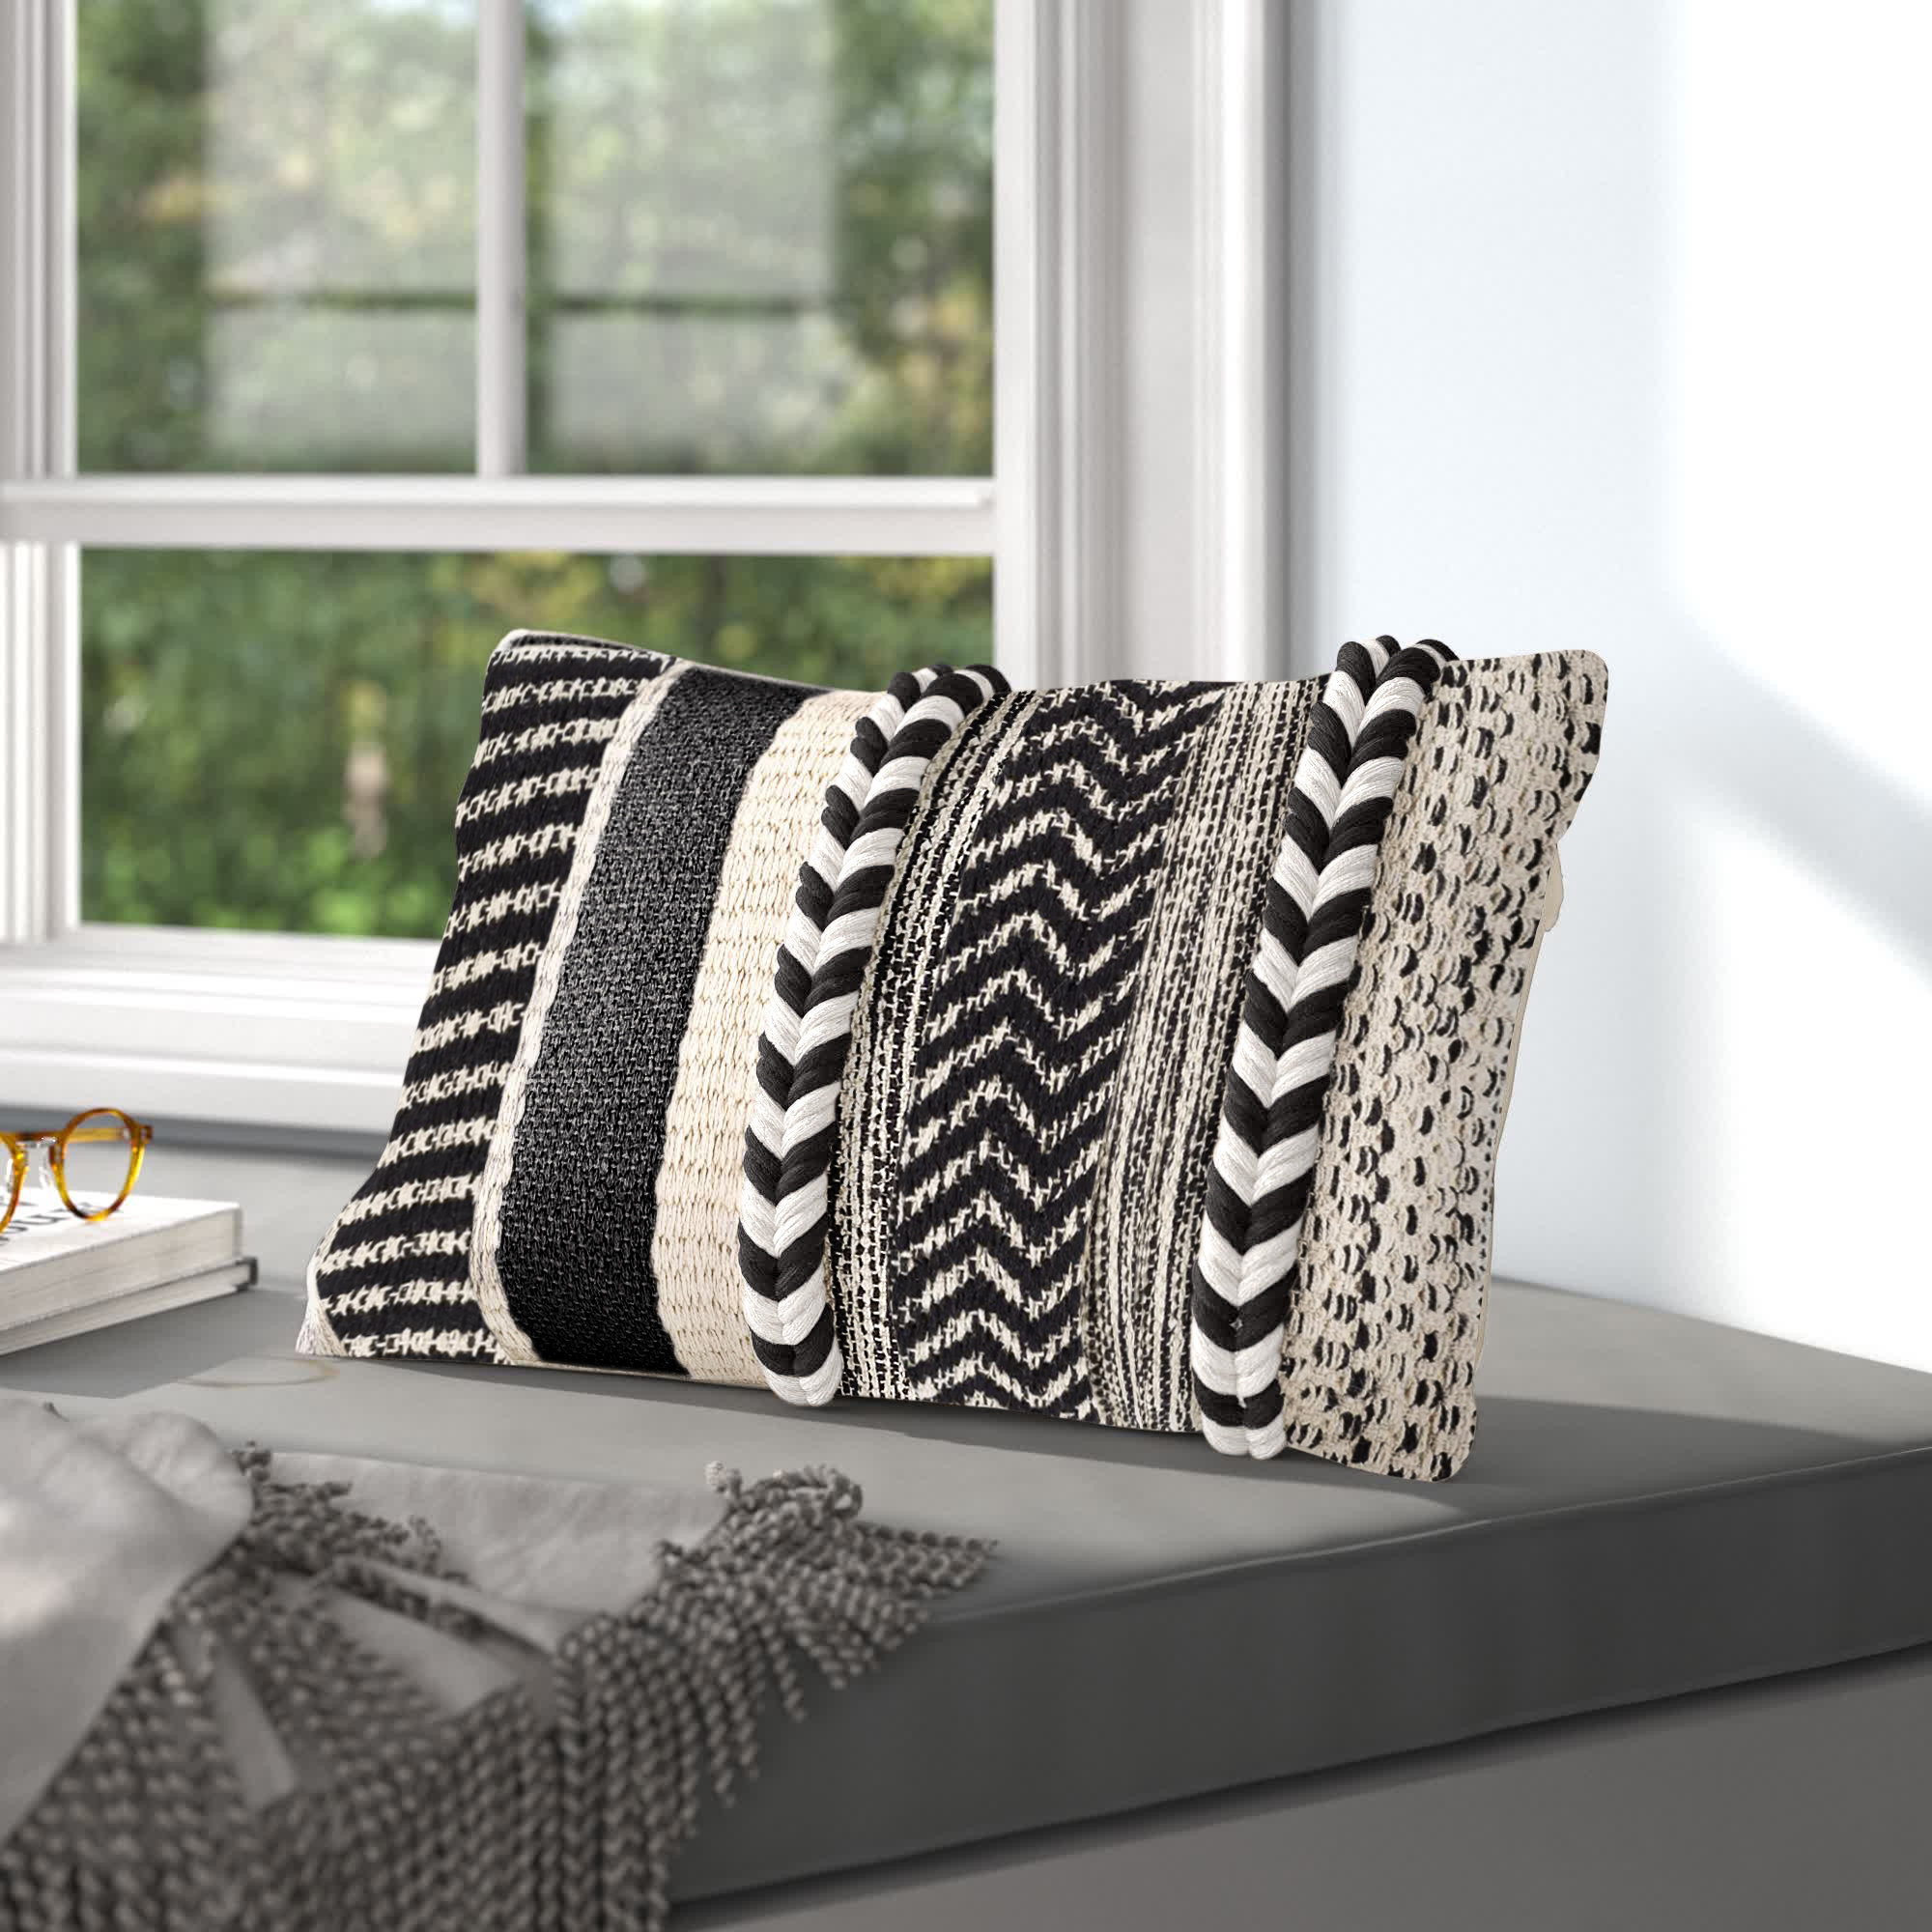 18" Striped Pattern Decor Cotton Linen Throw Pillow Case Cushion Cover Home 